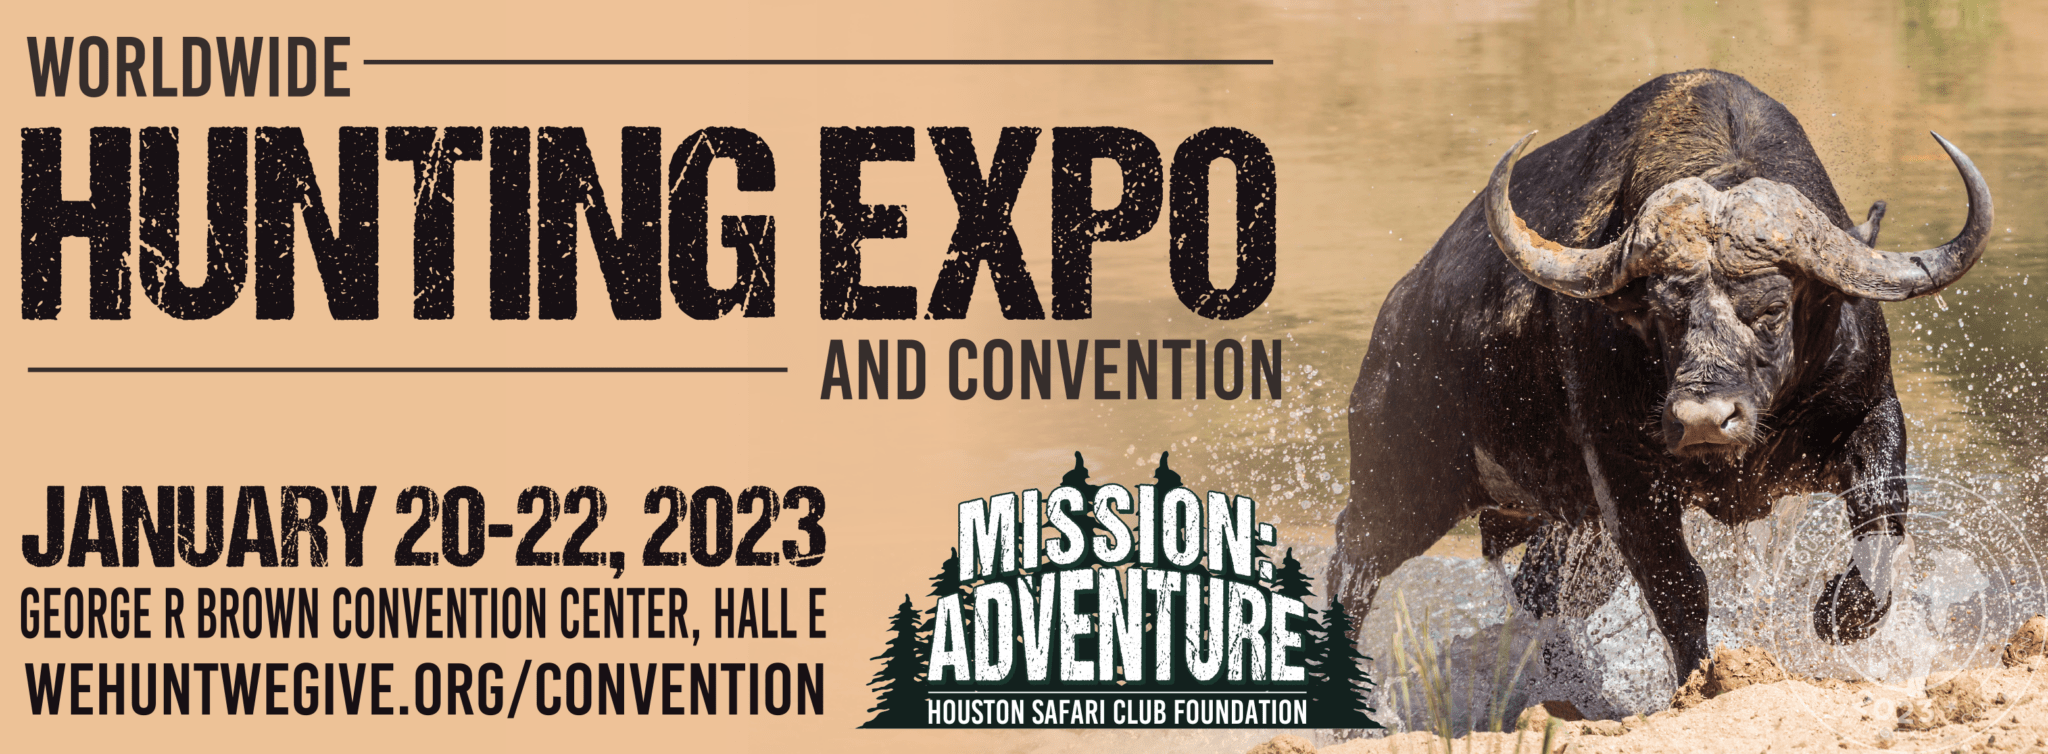 HSCF's 2023 Worldwide Hunting Expo & Convention Houston Safari Club